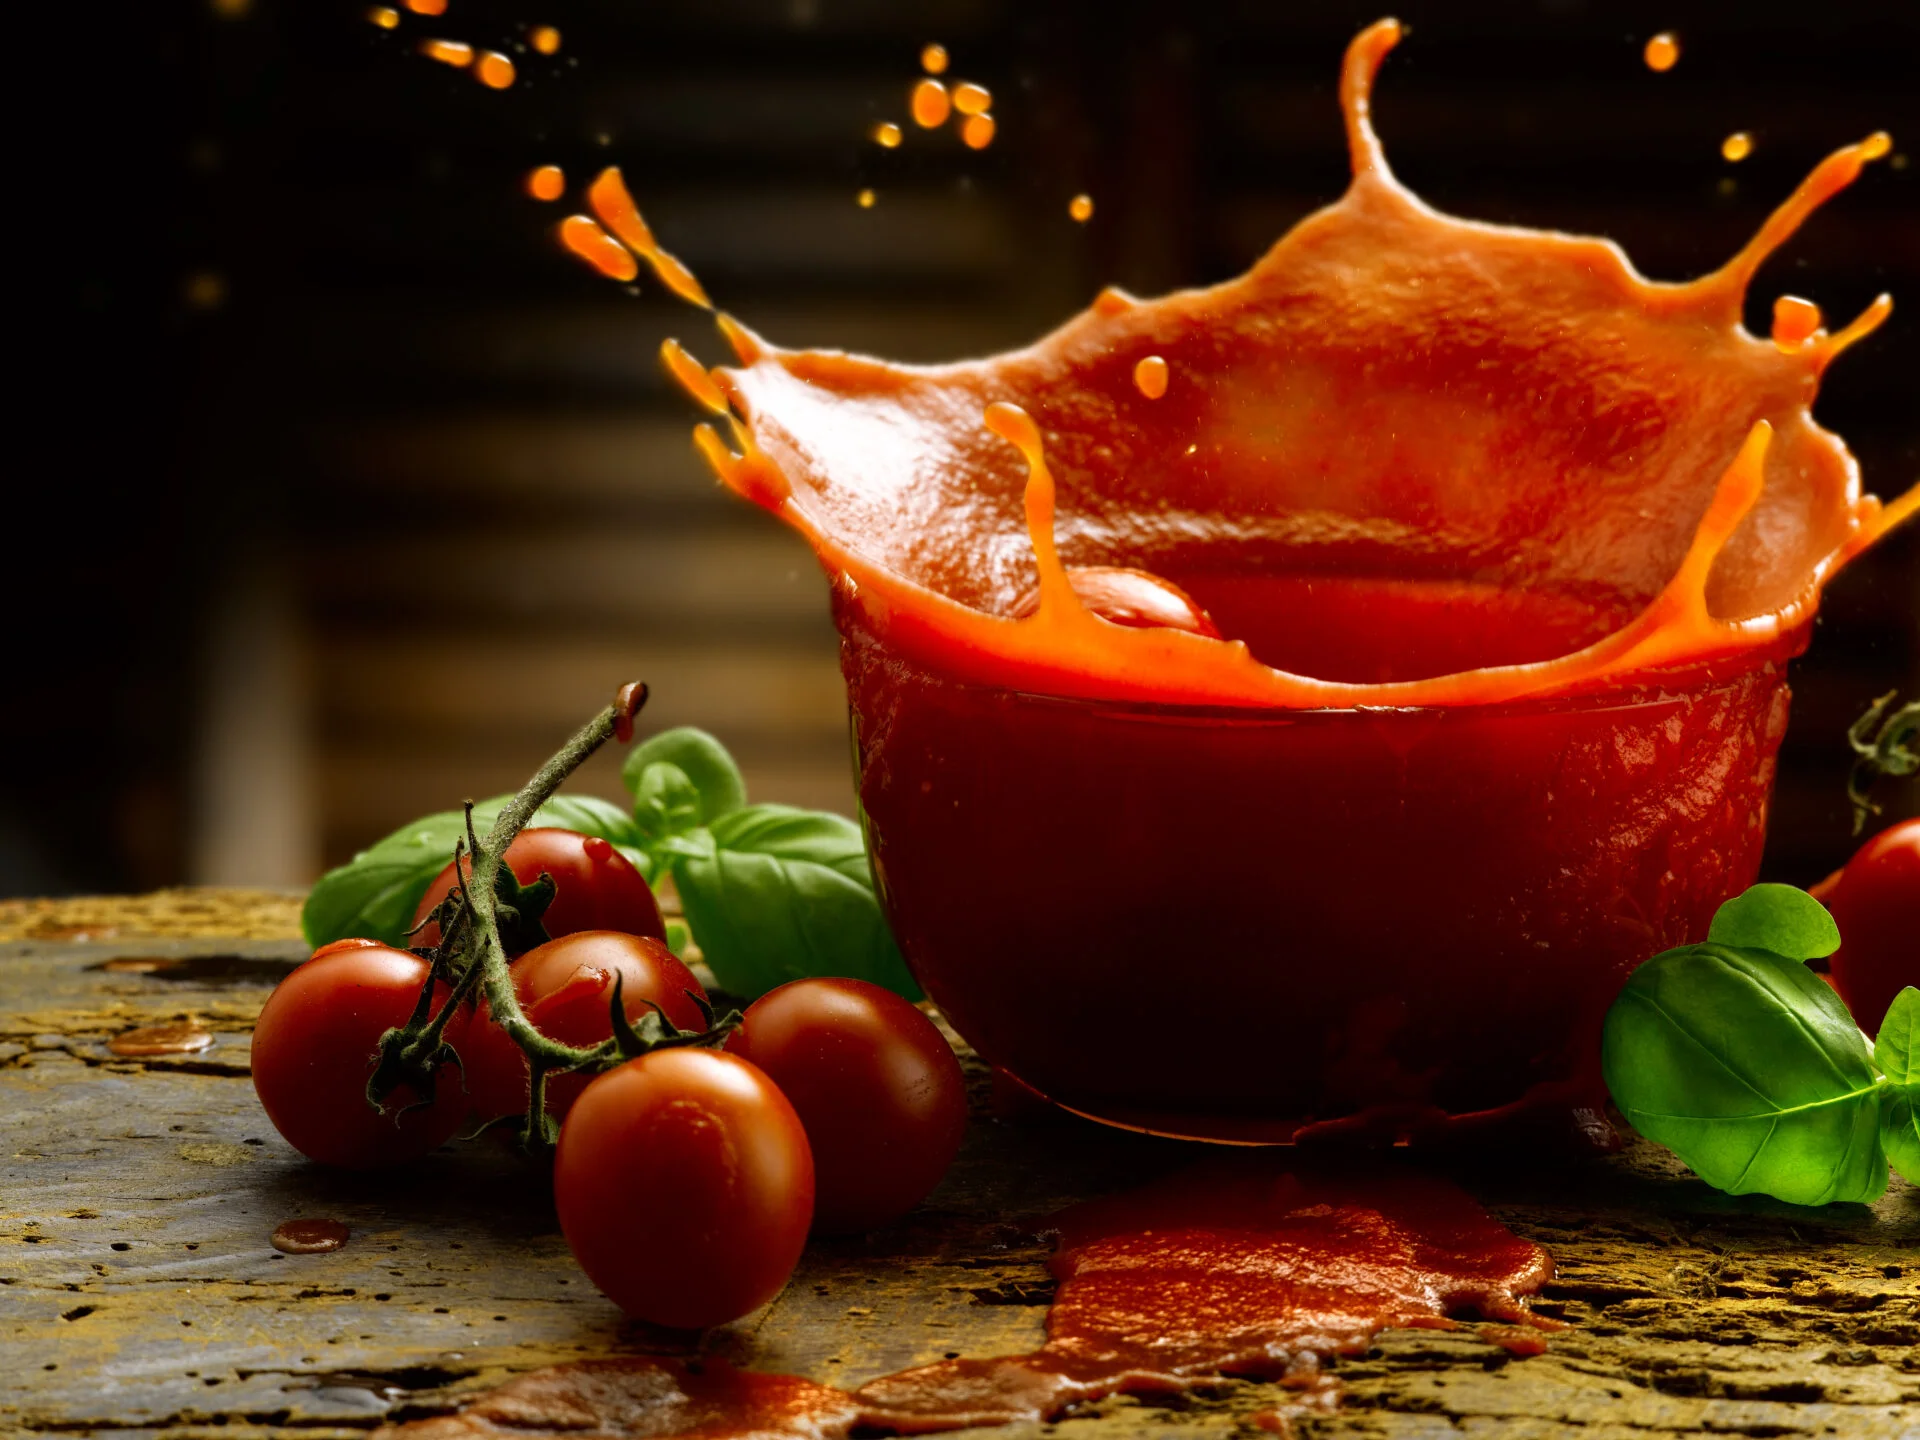 Tomato sauce on table with tomato splash